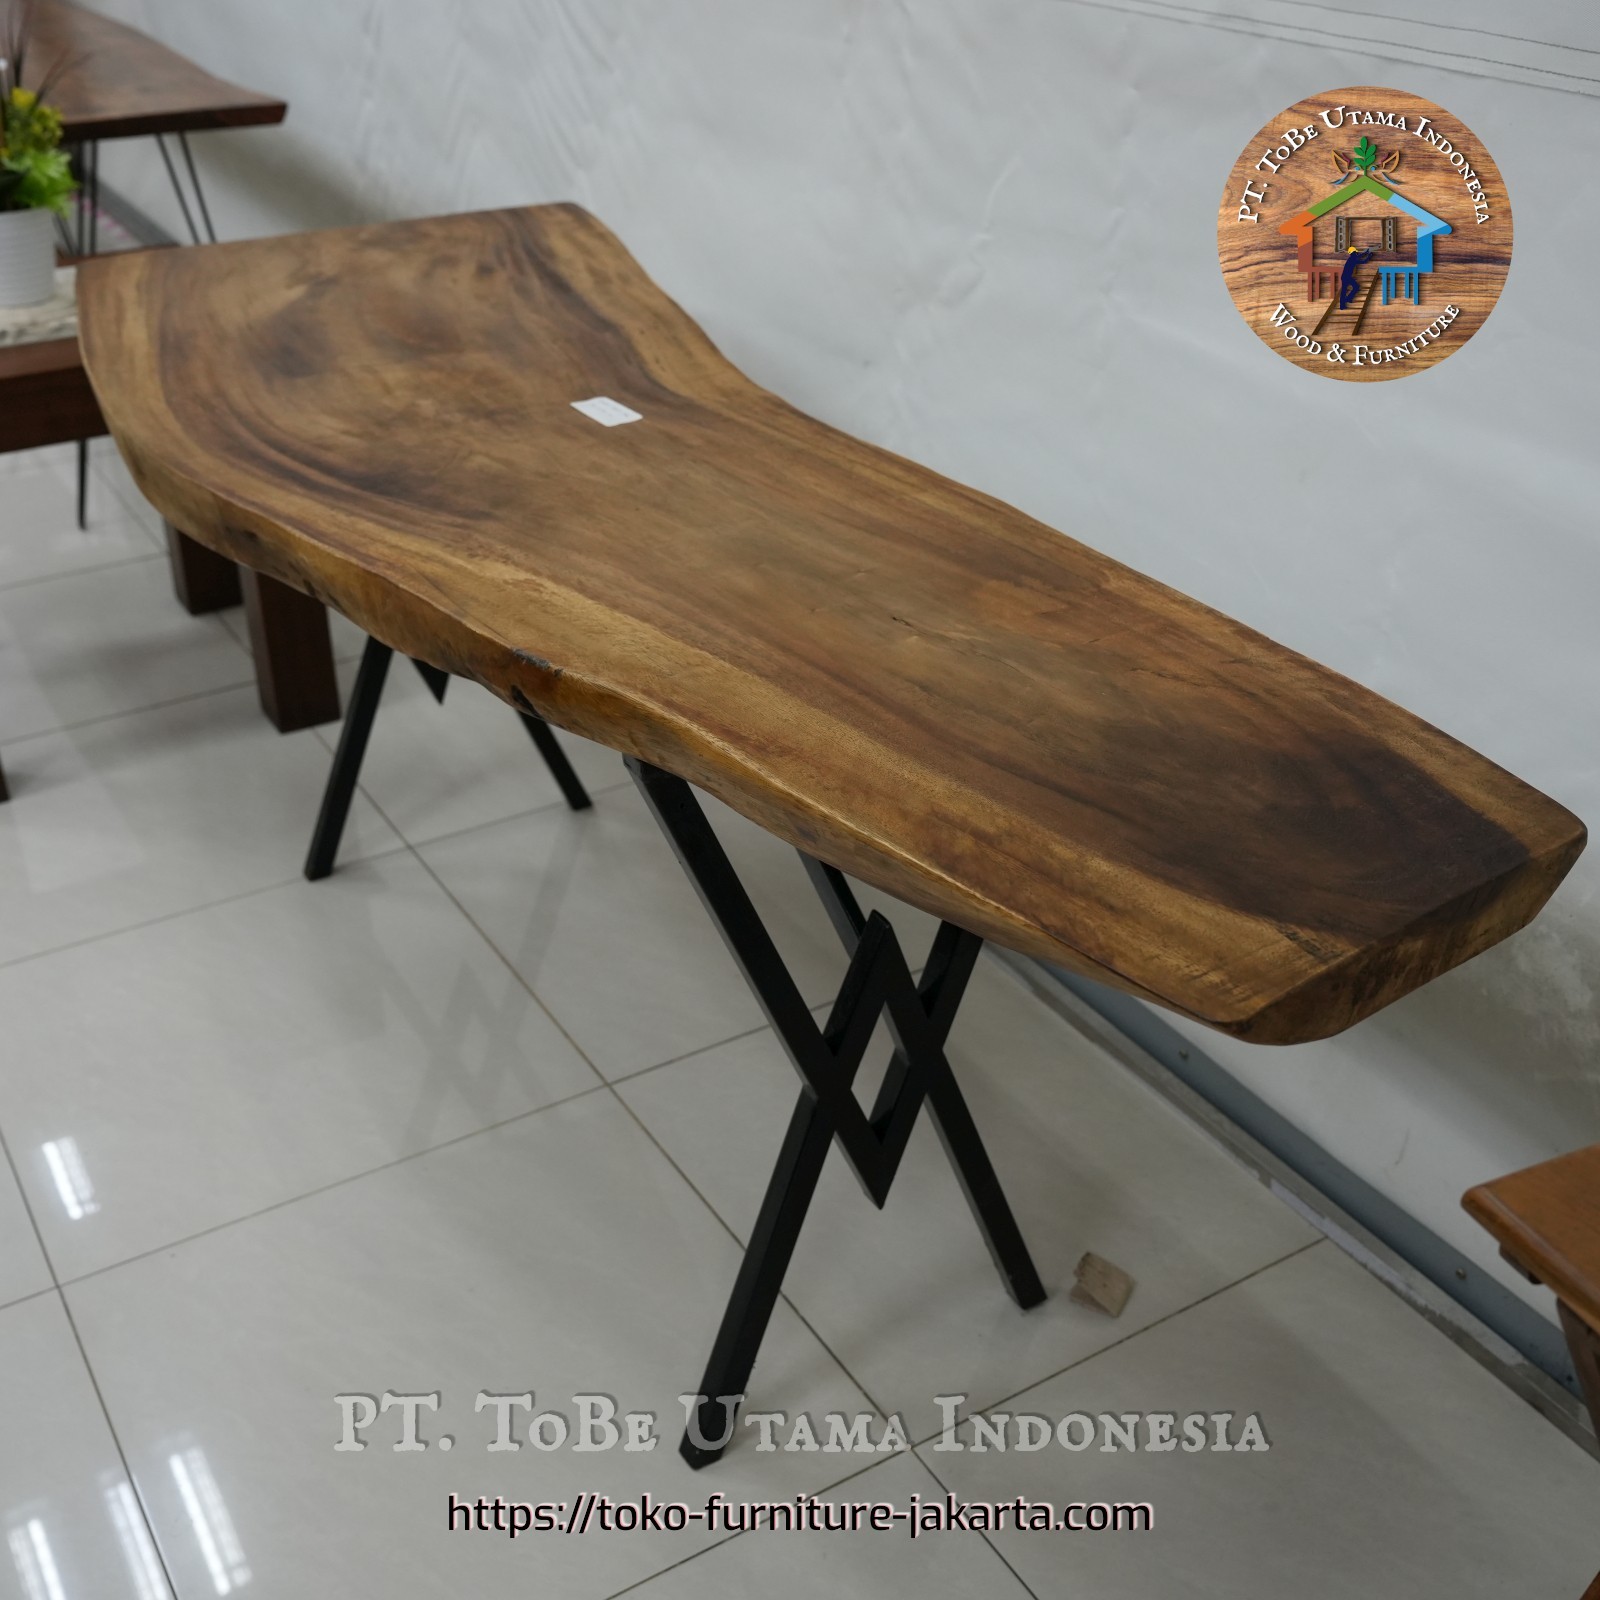 Living Room - Work Desk: JCT Garden Table made of trembesi wood (image 1 of 4).